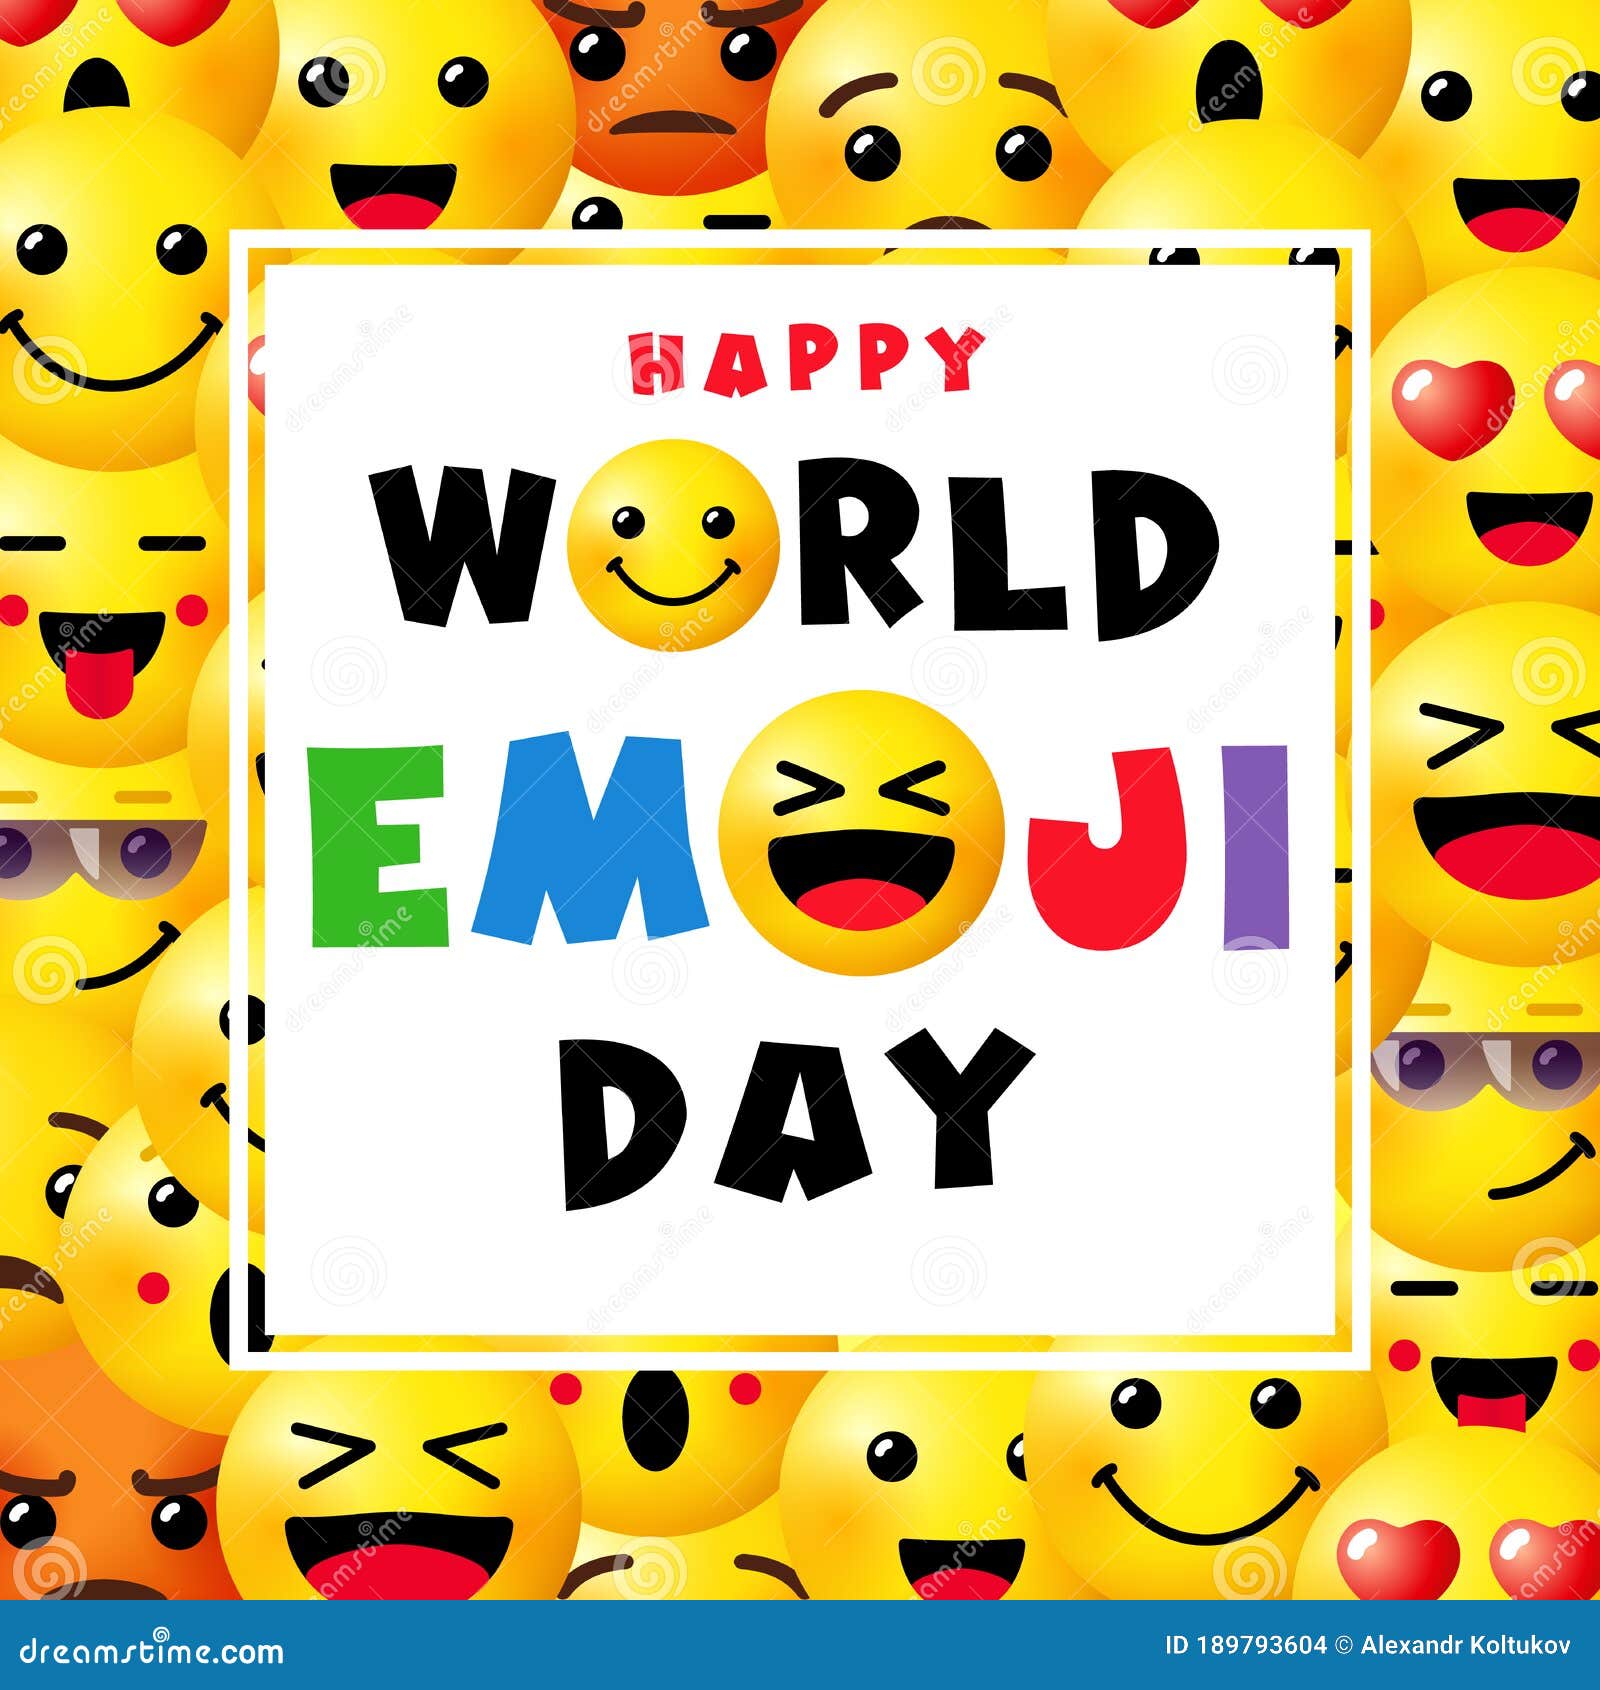 Happy World Emoji Day Square Banner Stock Vector Illustration of